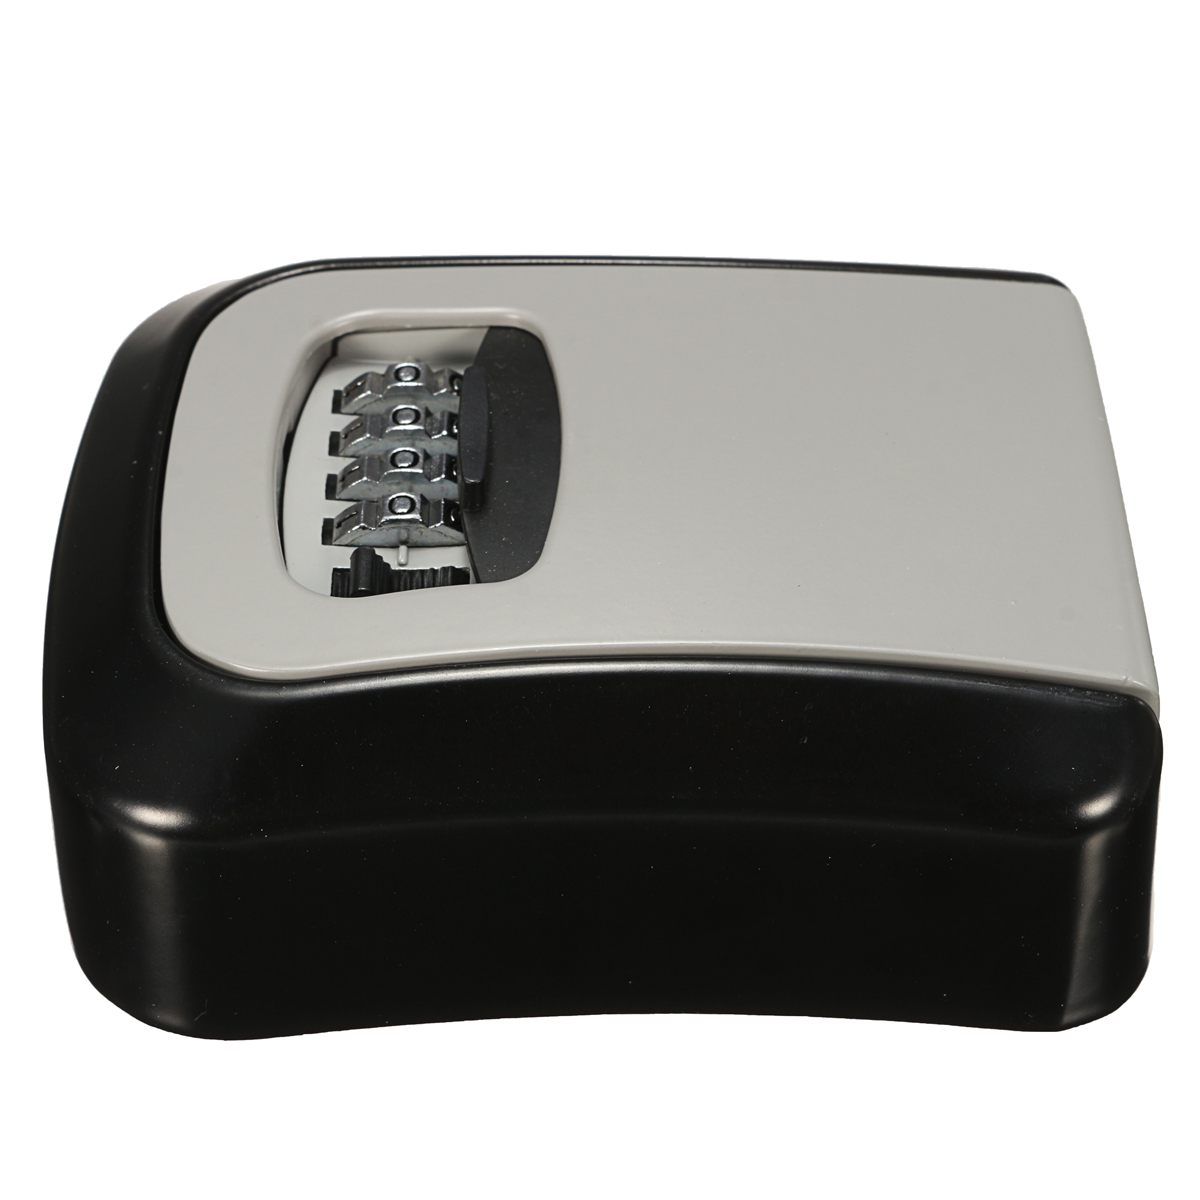 Wall-Mount-Key-Lock-Storage-Box-Security-Keyed-Door-Lock-with-4-Digit-Combination-Password-1205105-9